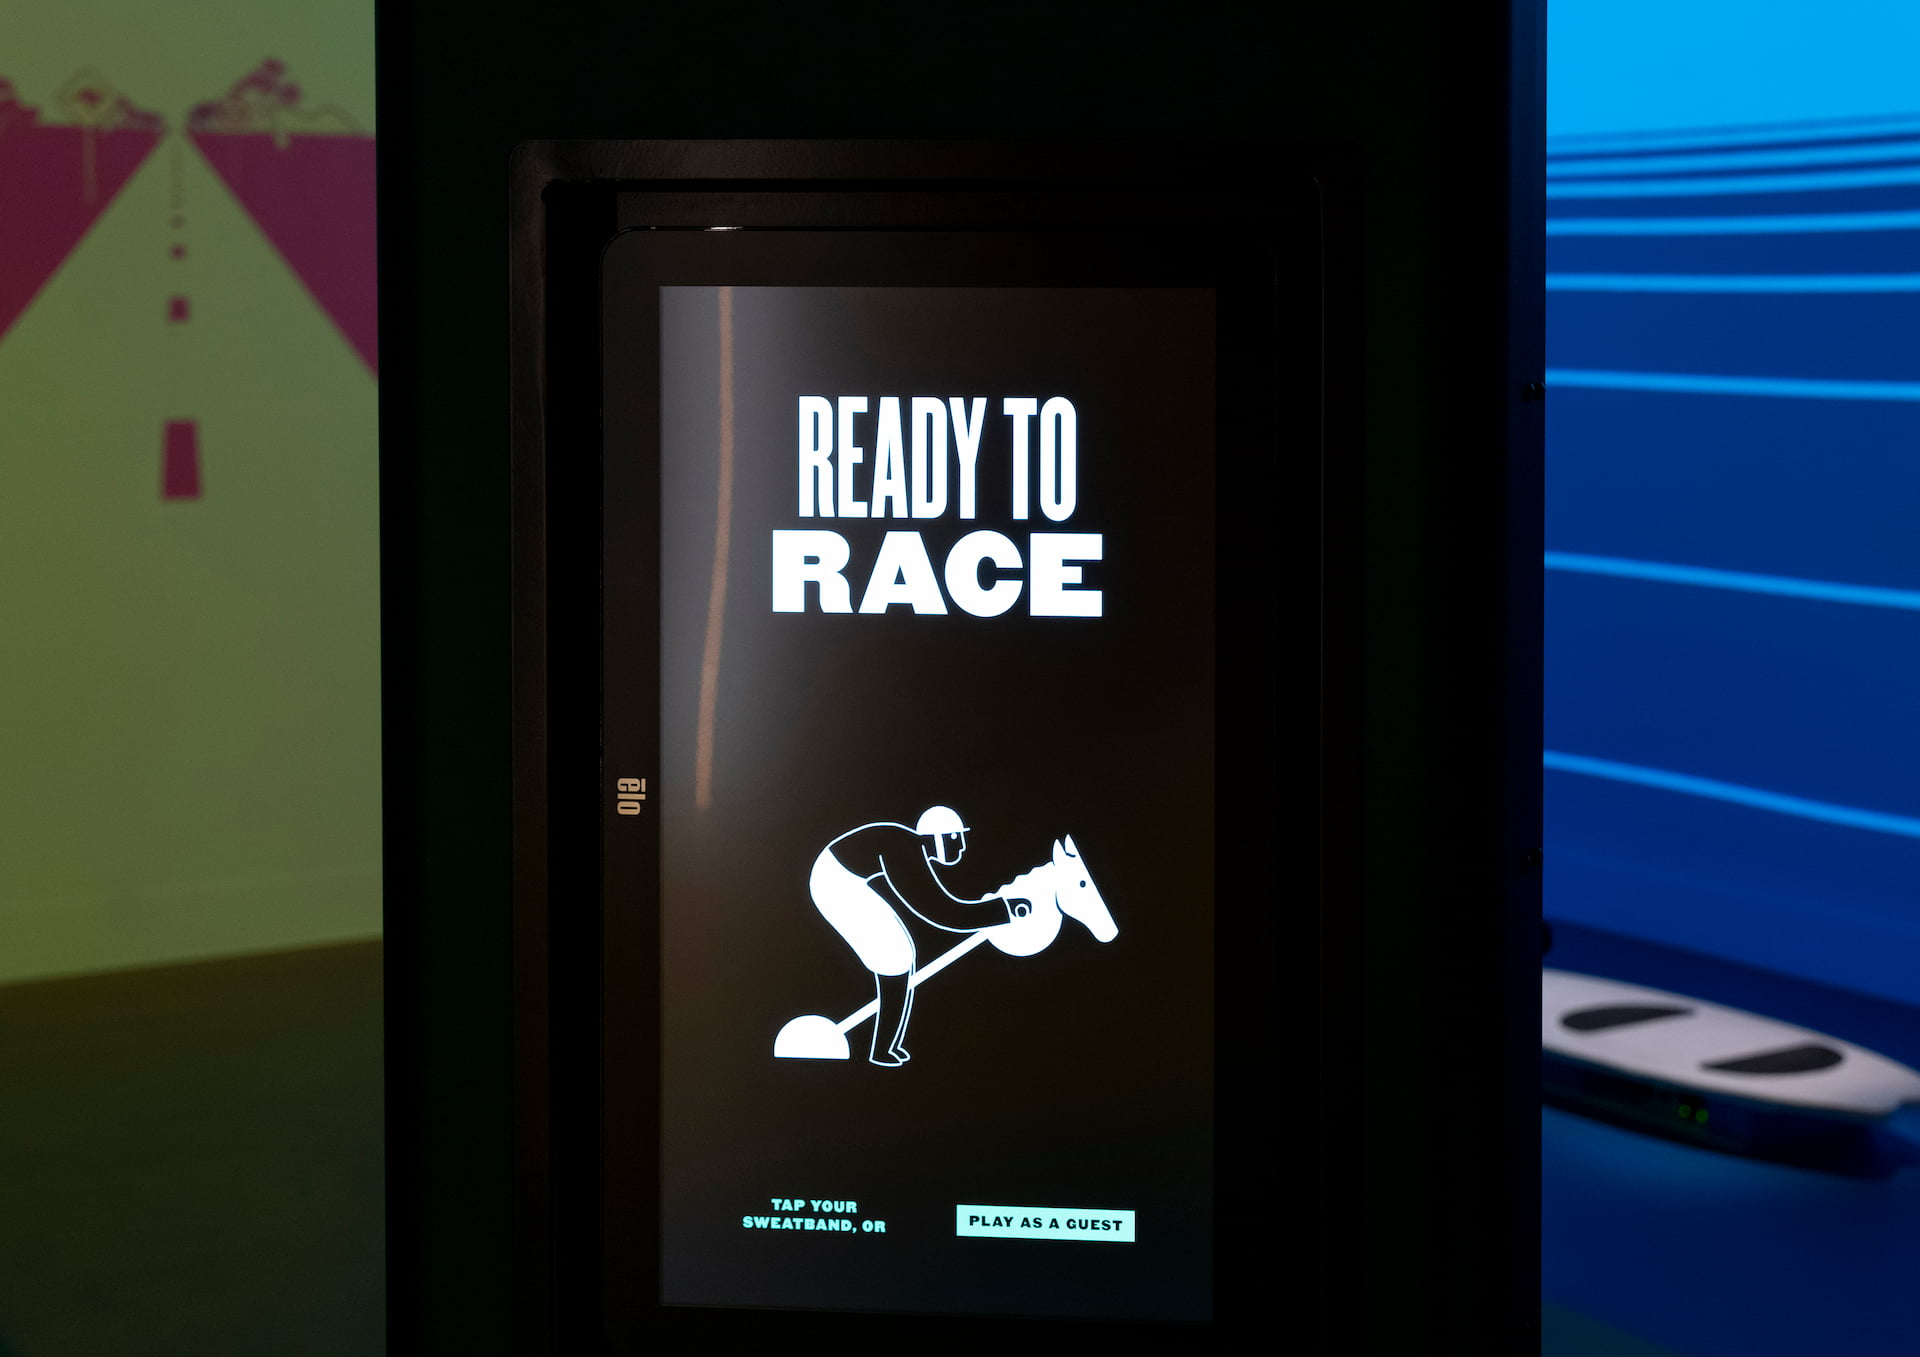 Screen reads Ready to Race above a cartoon jockey.